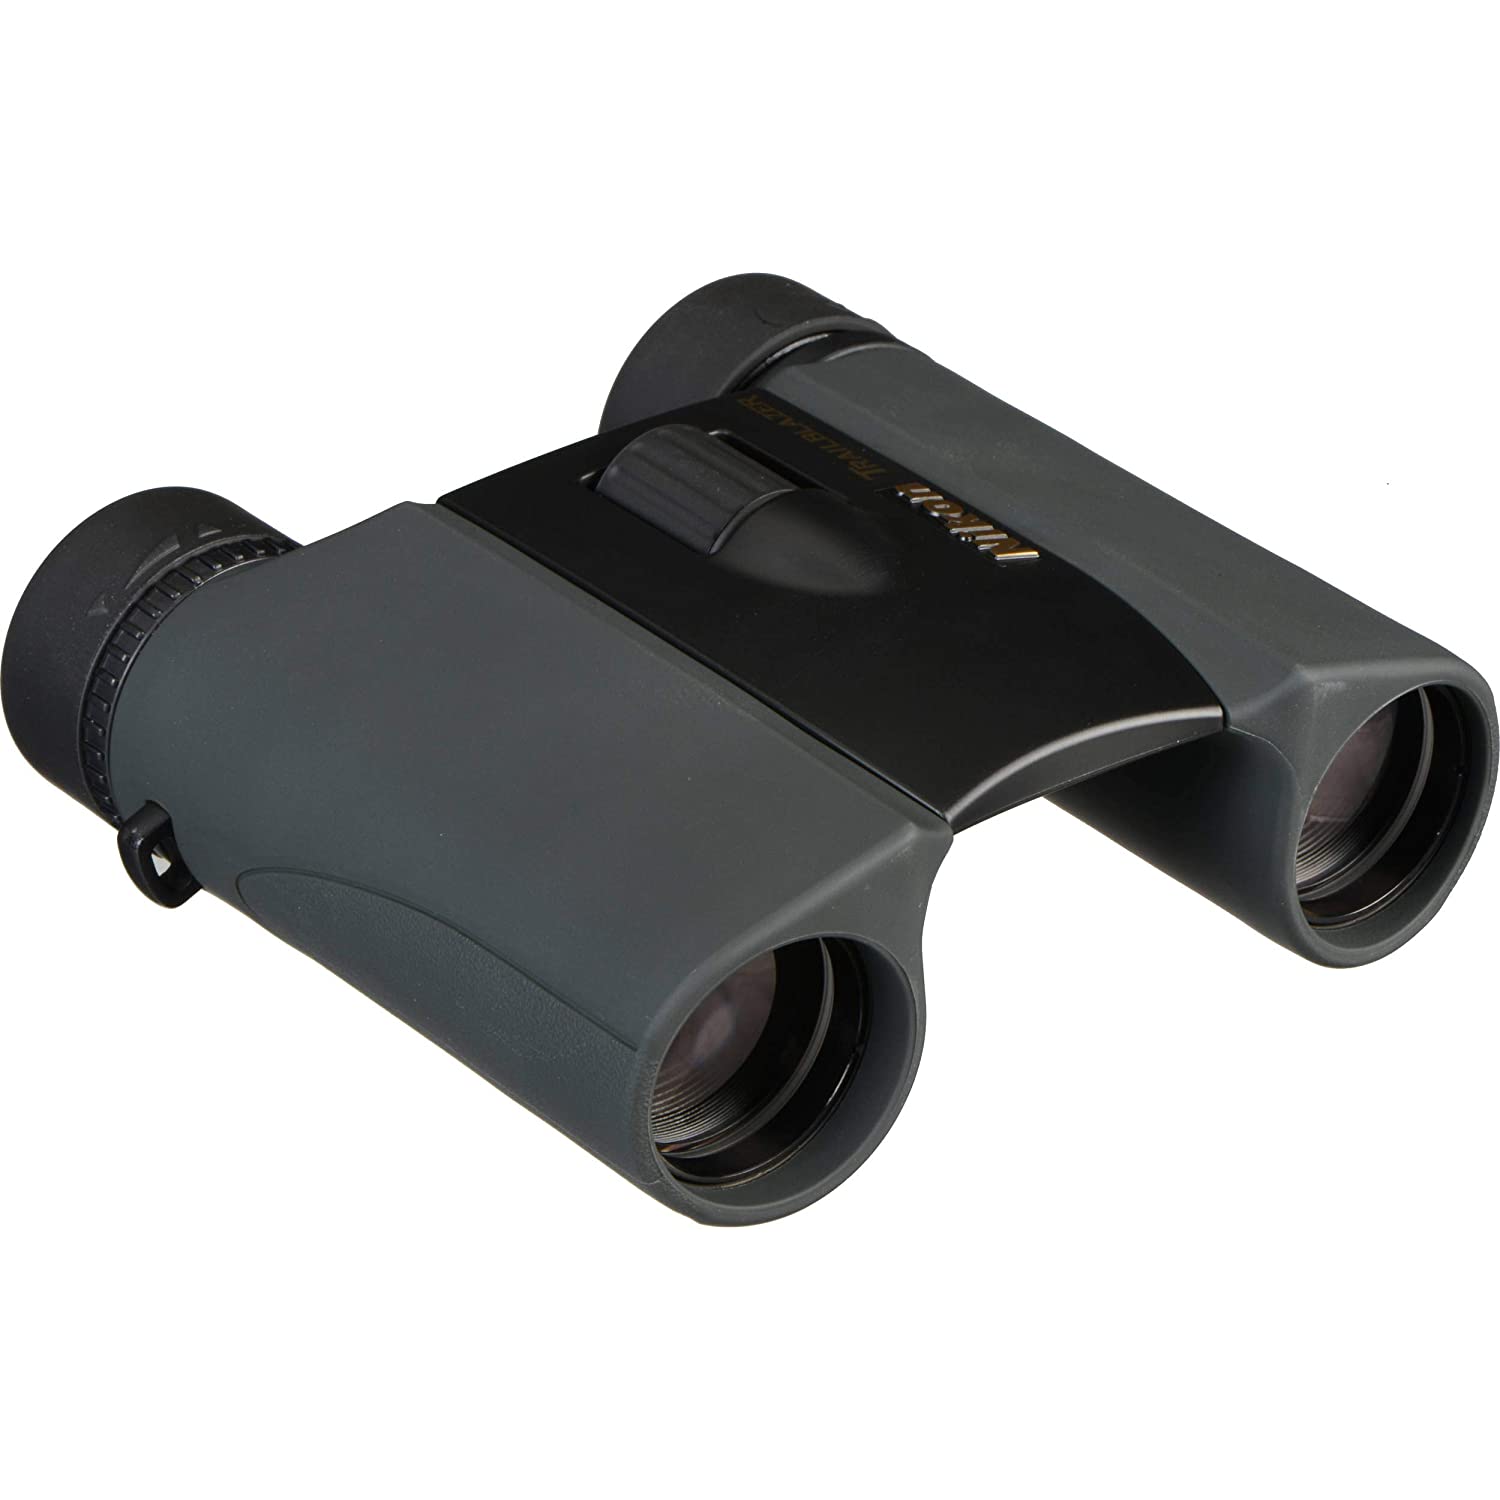 Photos - Binoculars / Monocular Nikon Trailblazer 8x25 ATB Waterproof & Fogproof Binoculars - Black  (8217)